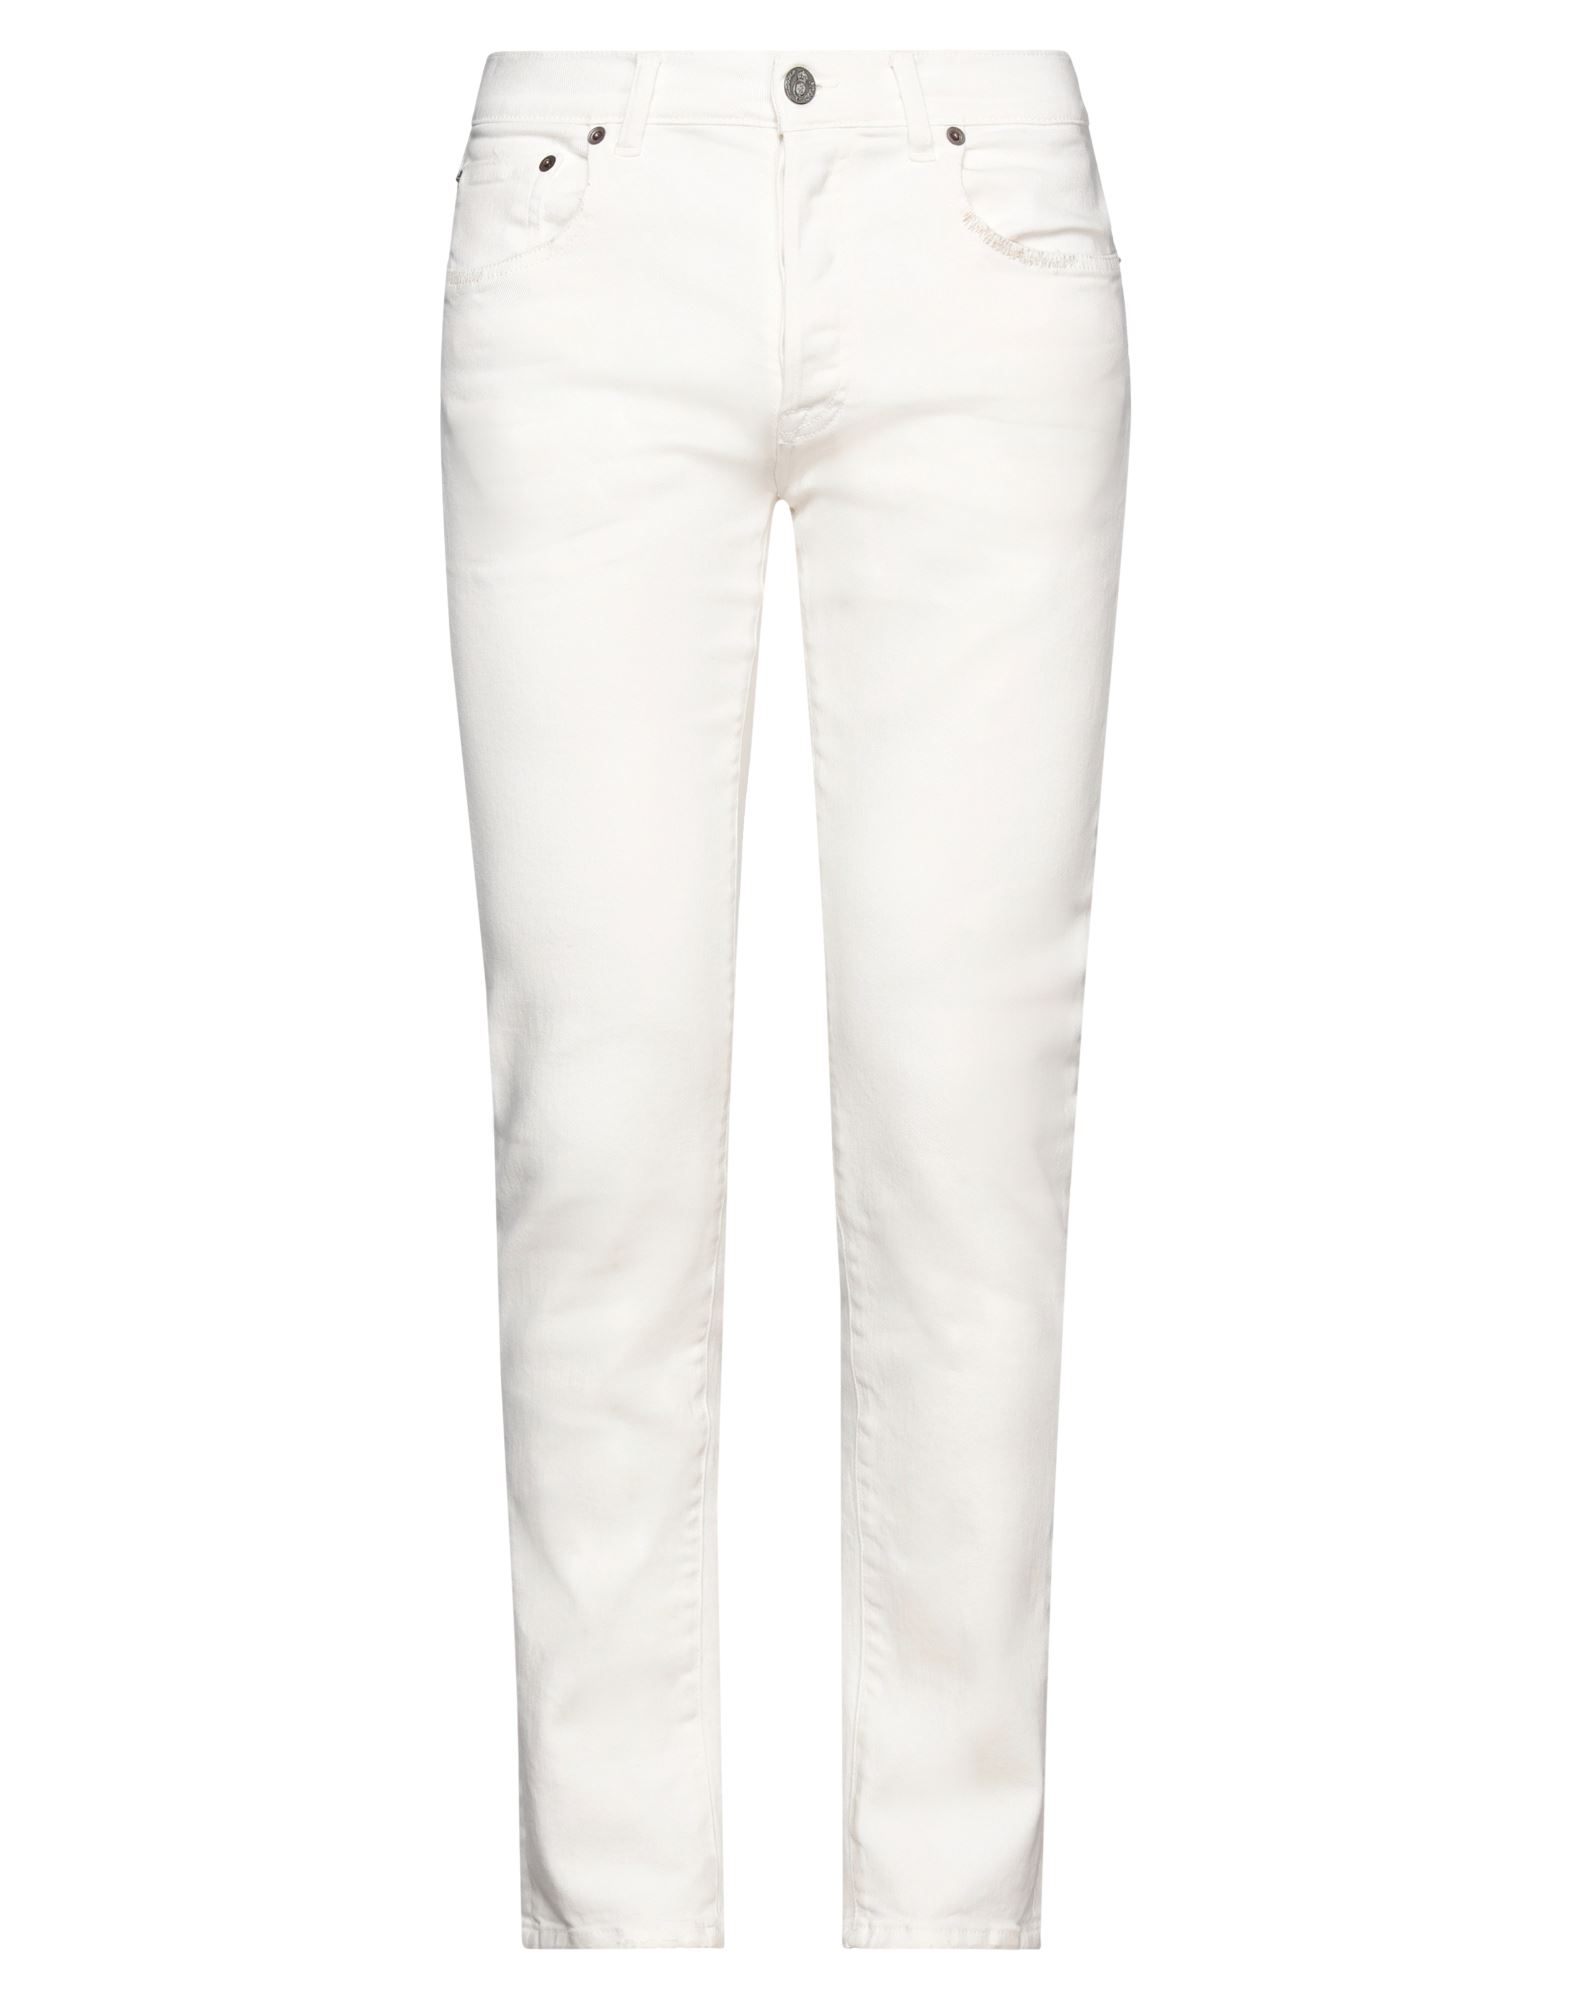 Pmds Premium Mood Denim Superior Man Jeans White Size 33w-32l Cotton, Elastane